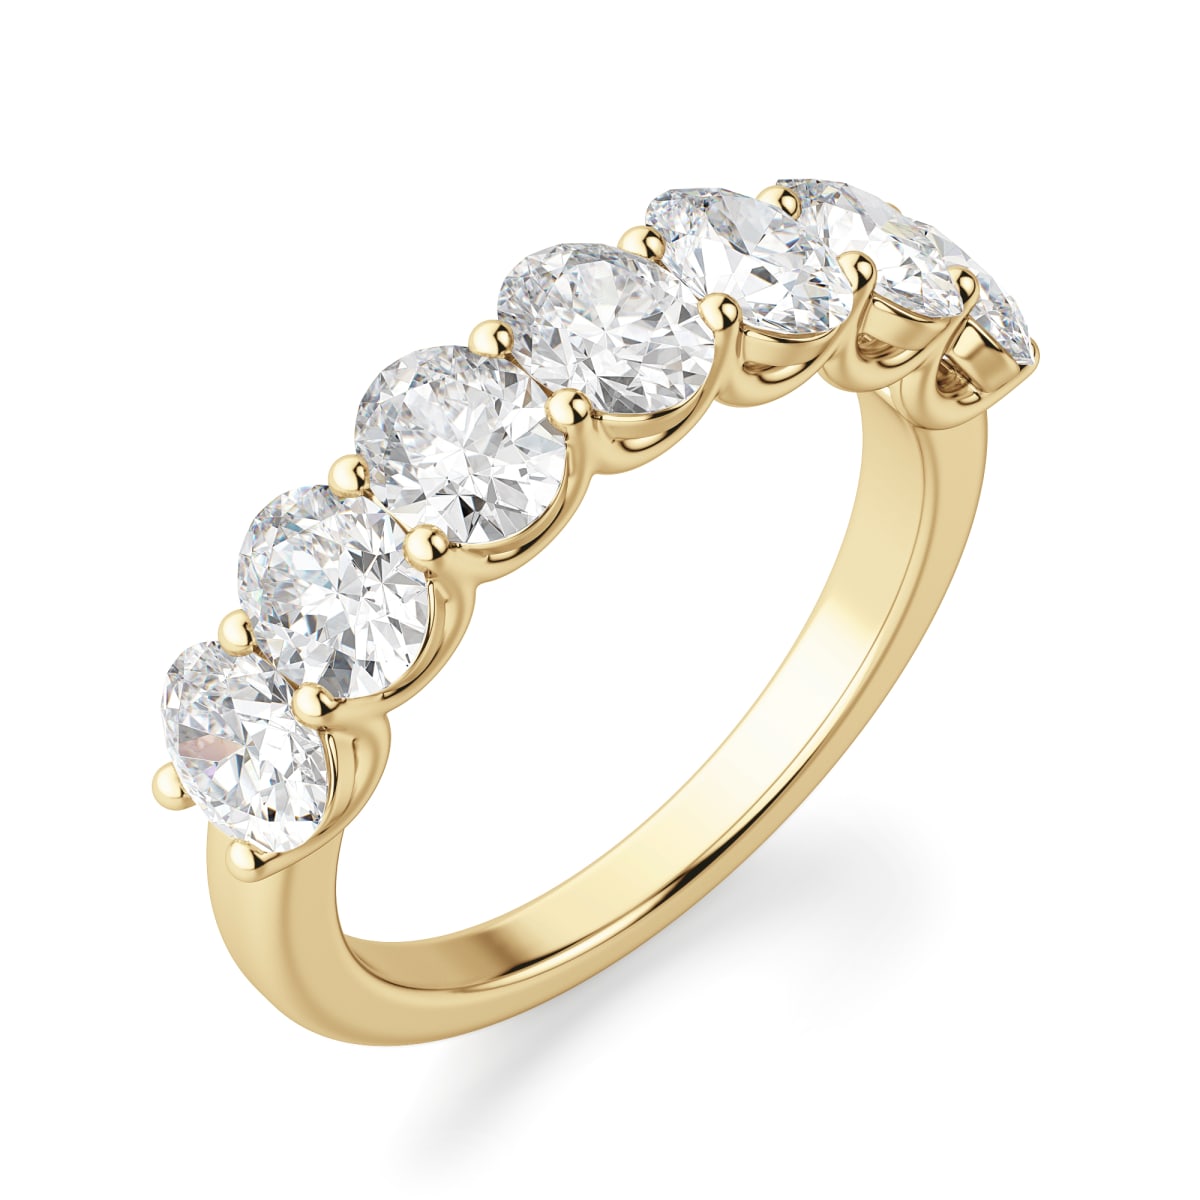 Oval Cut Seven Stone Wedding Band, Ring Size 7.25, 14K Yellow Gold, Nexus Diamond Alternative